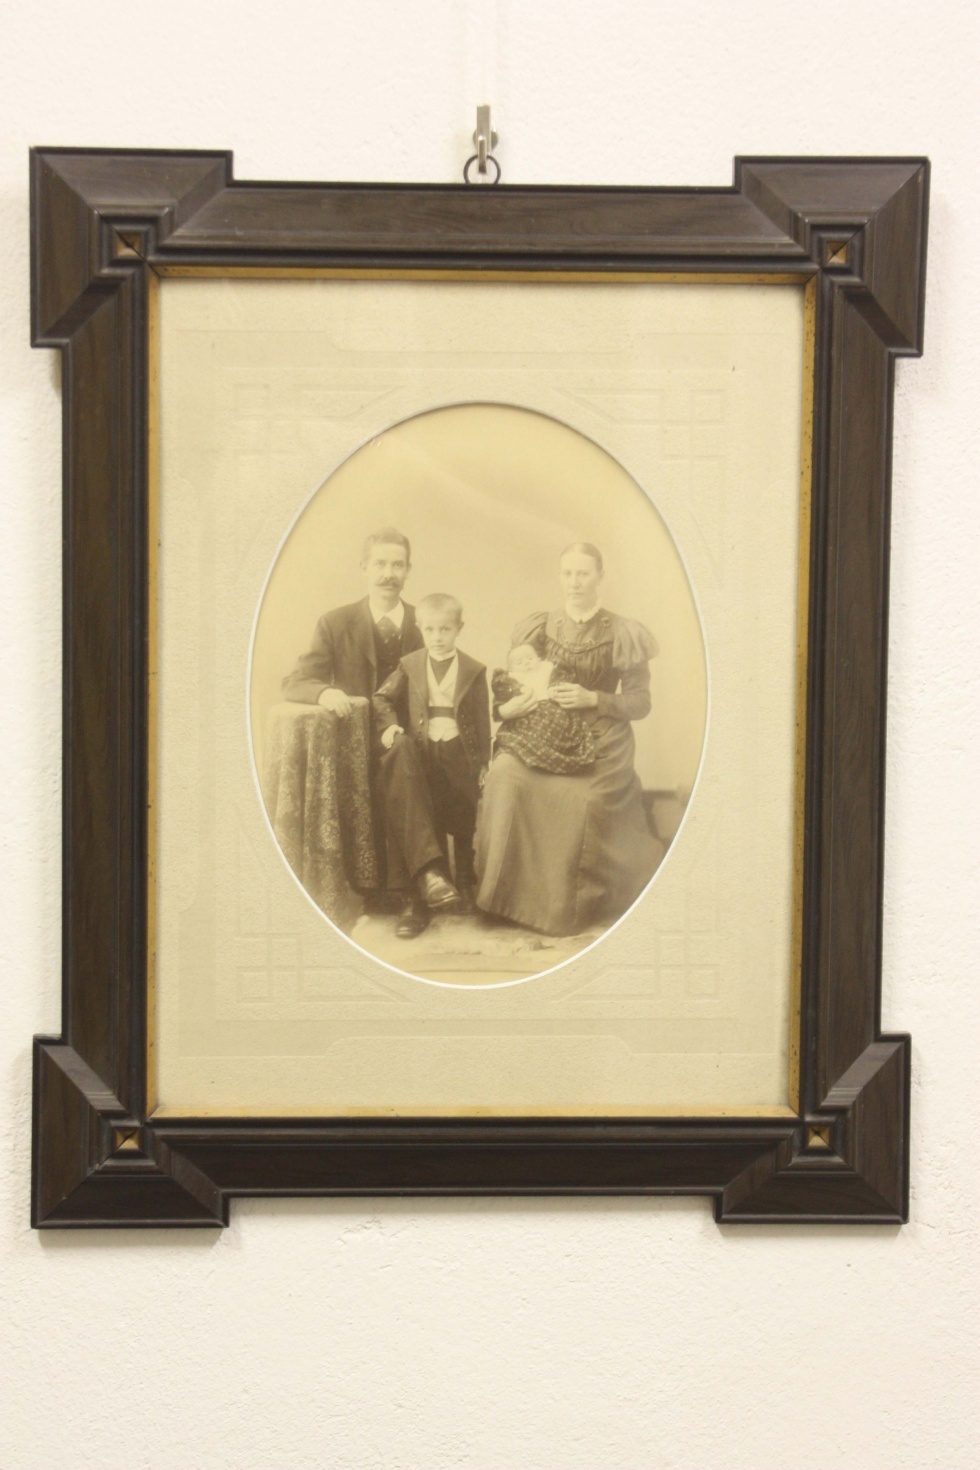 Fotografie, gerahmt, Familie Duldhardt (Museum Wolmirstedt RR-F)